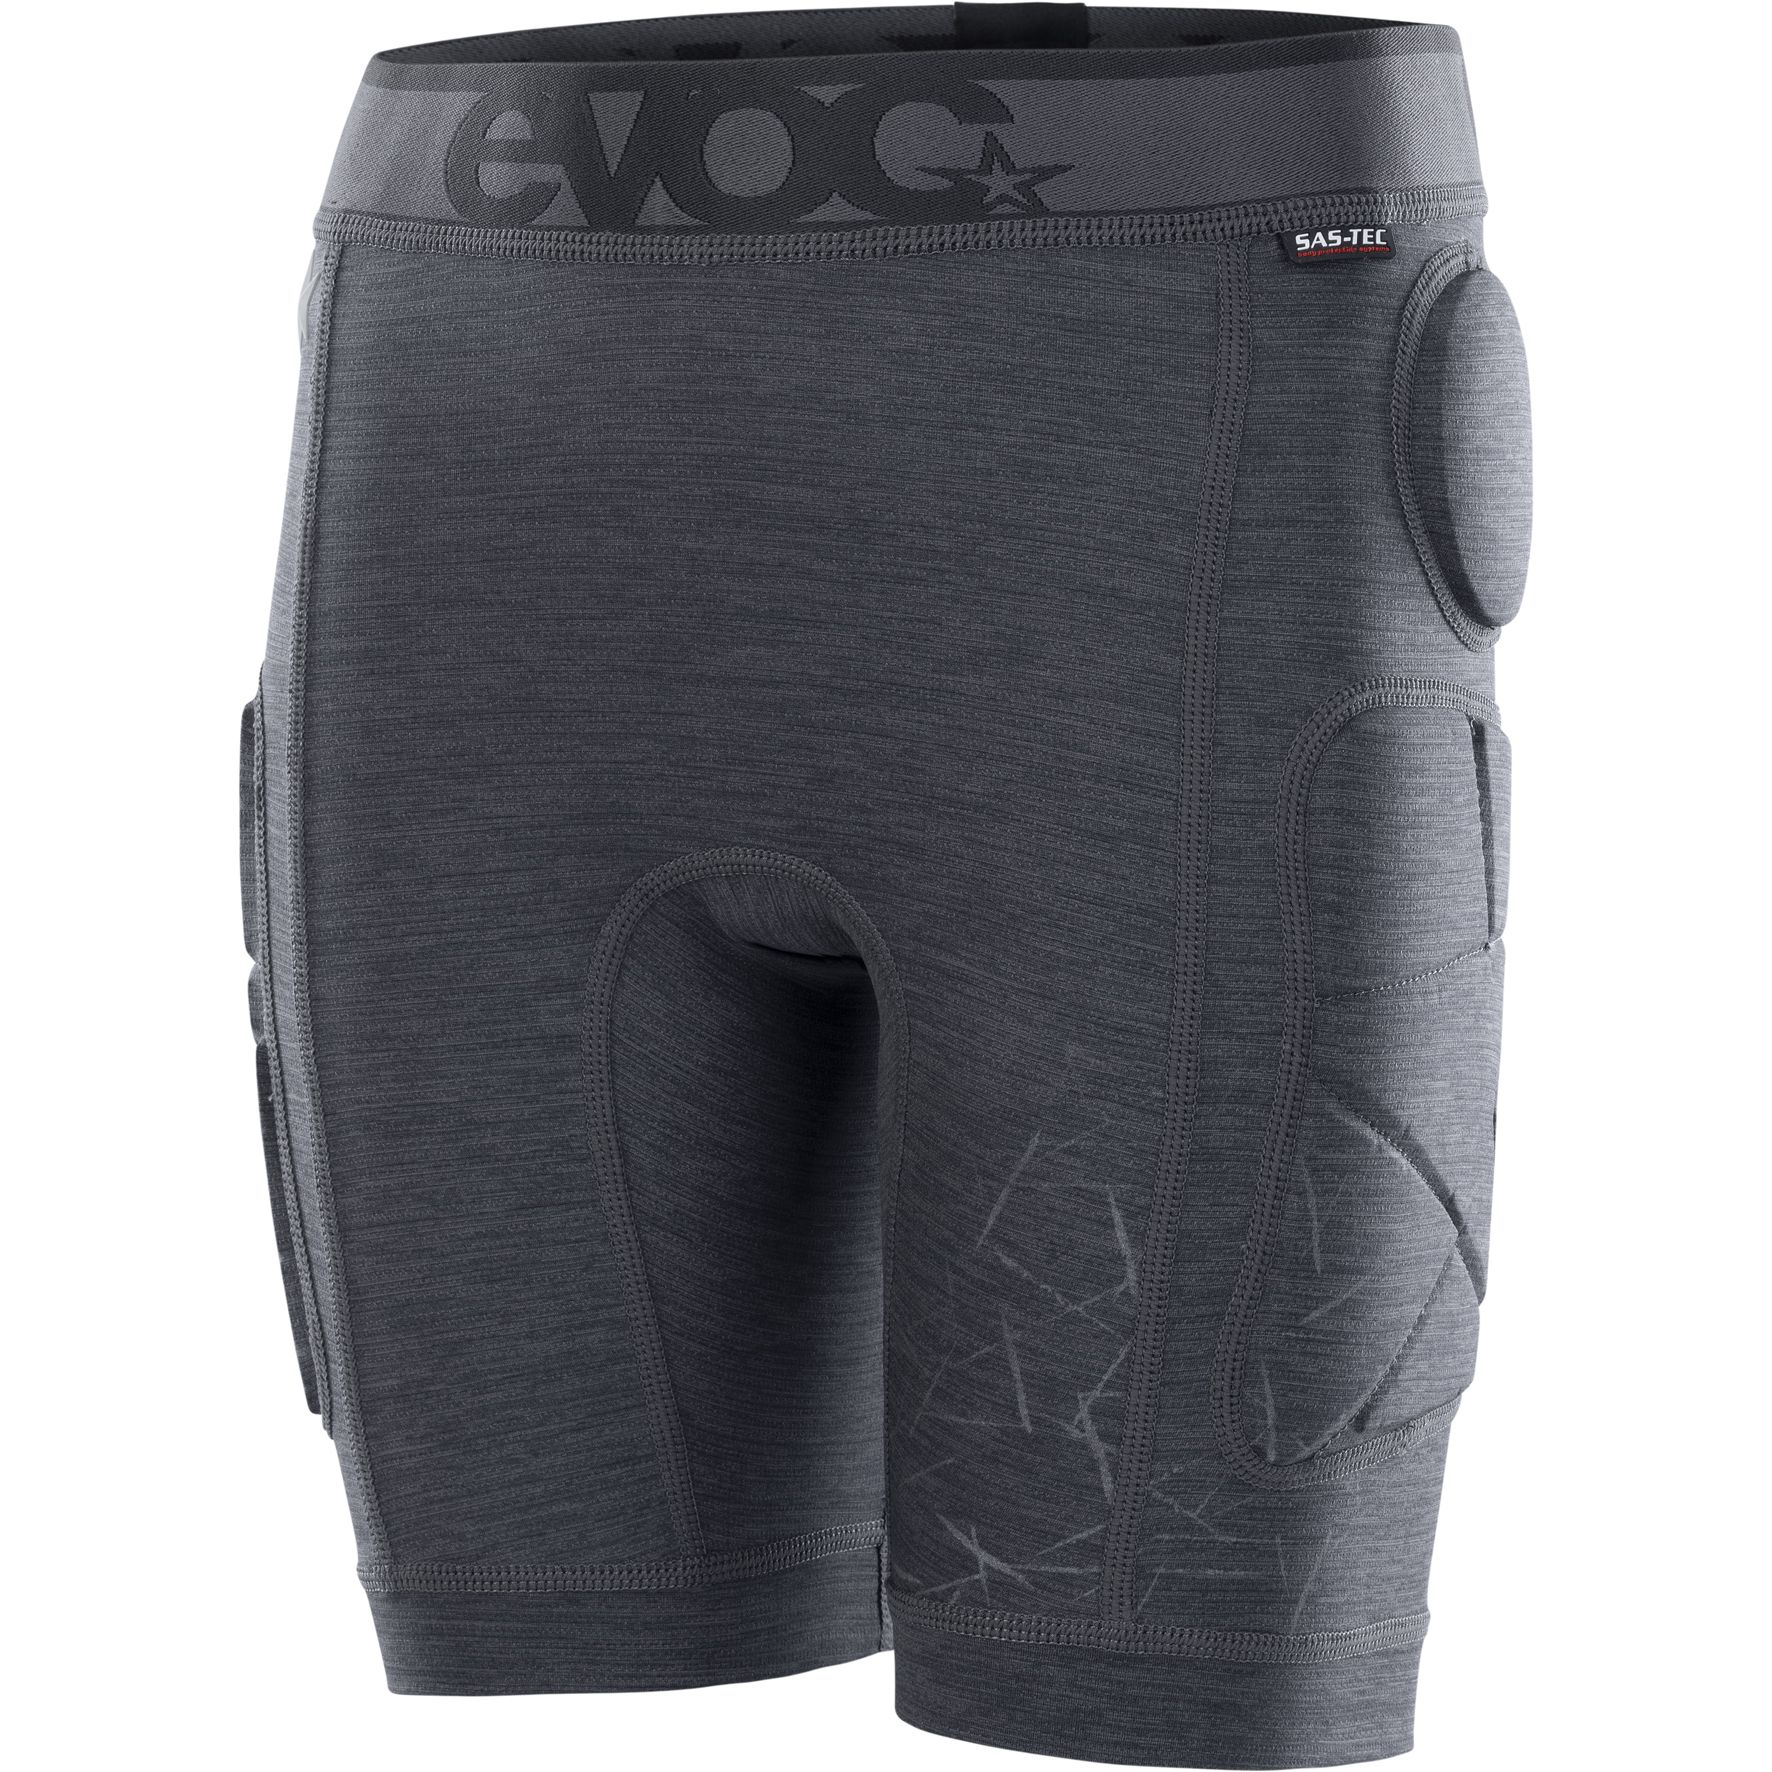 Productfoto van EVOC Crash Pants Kids - Kinder Protector Broek - Carbon Grey